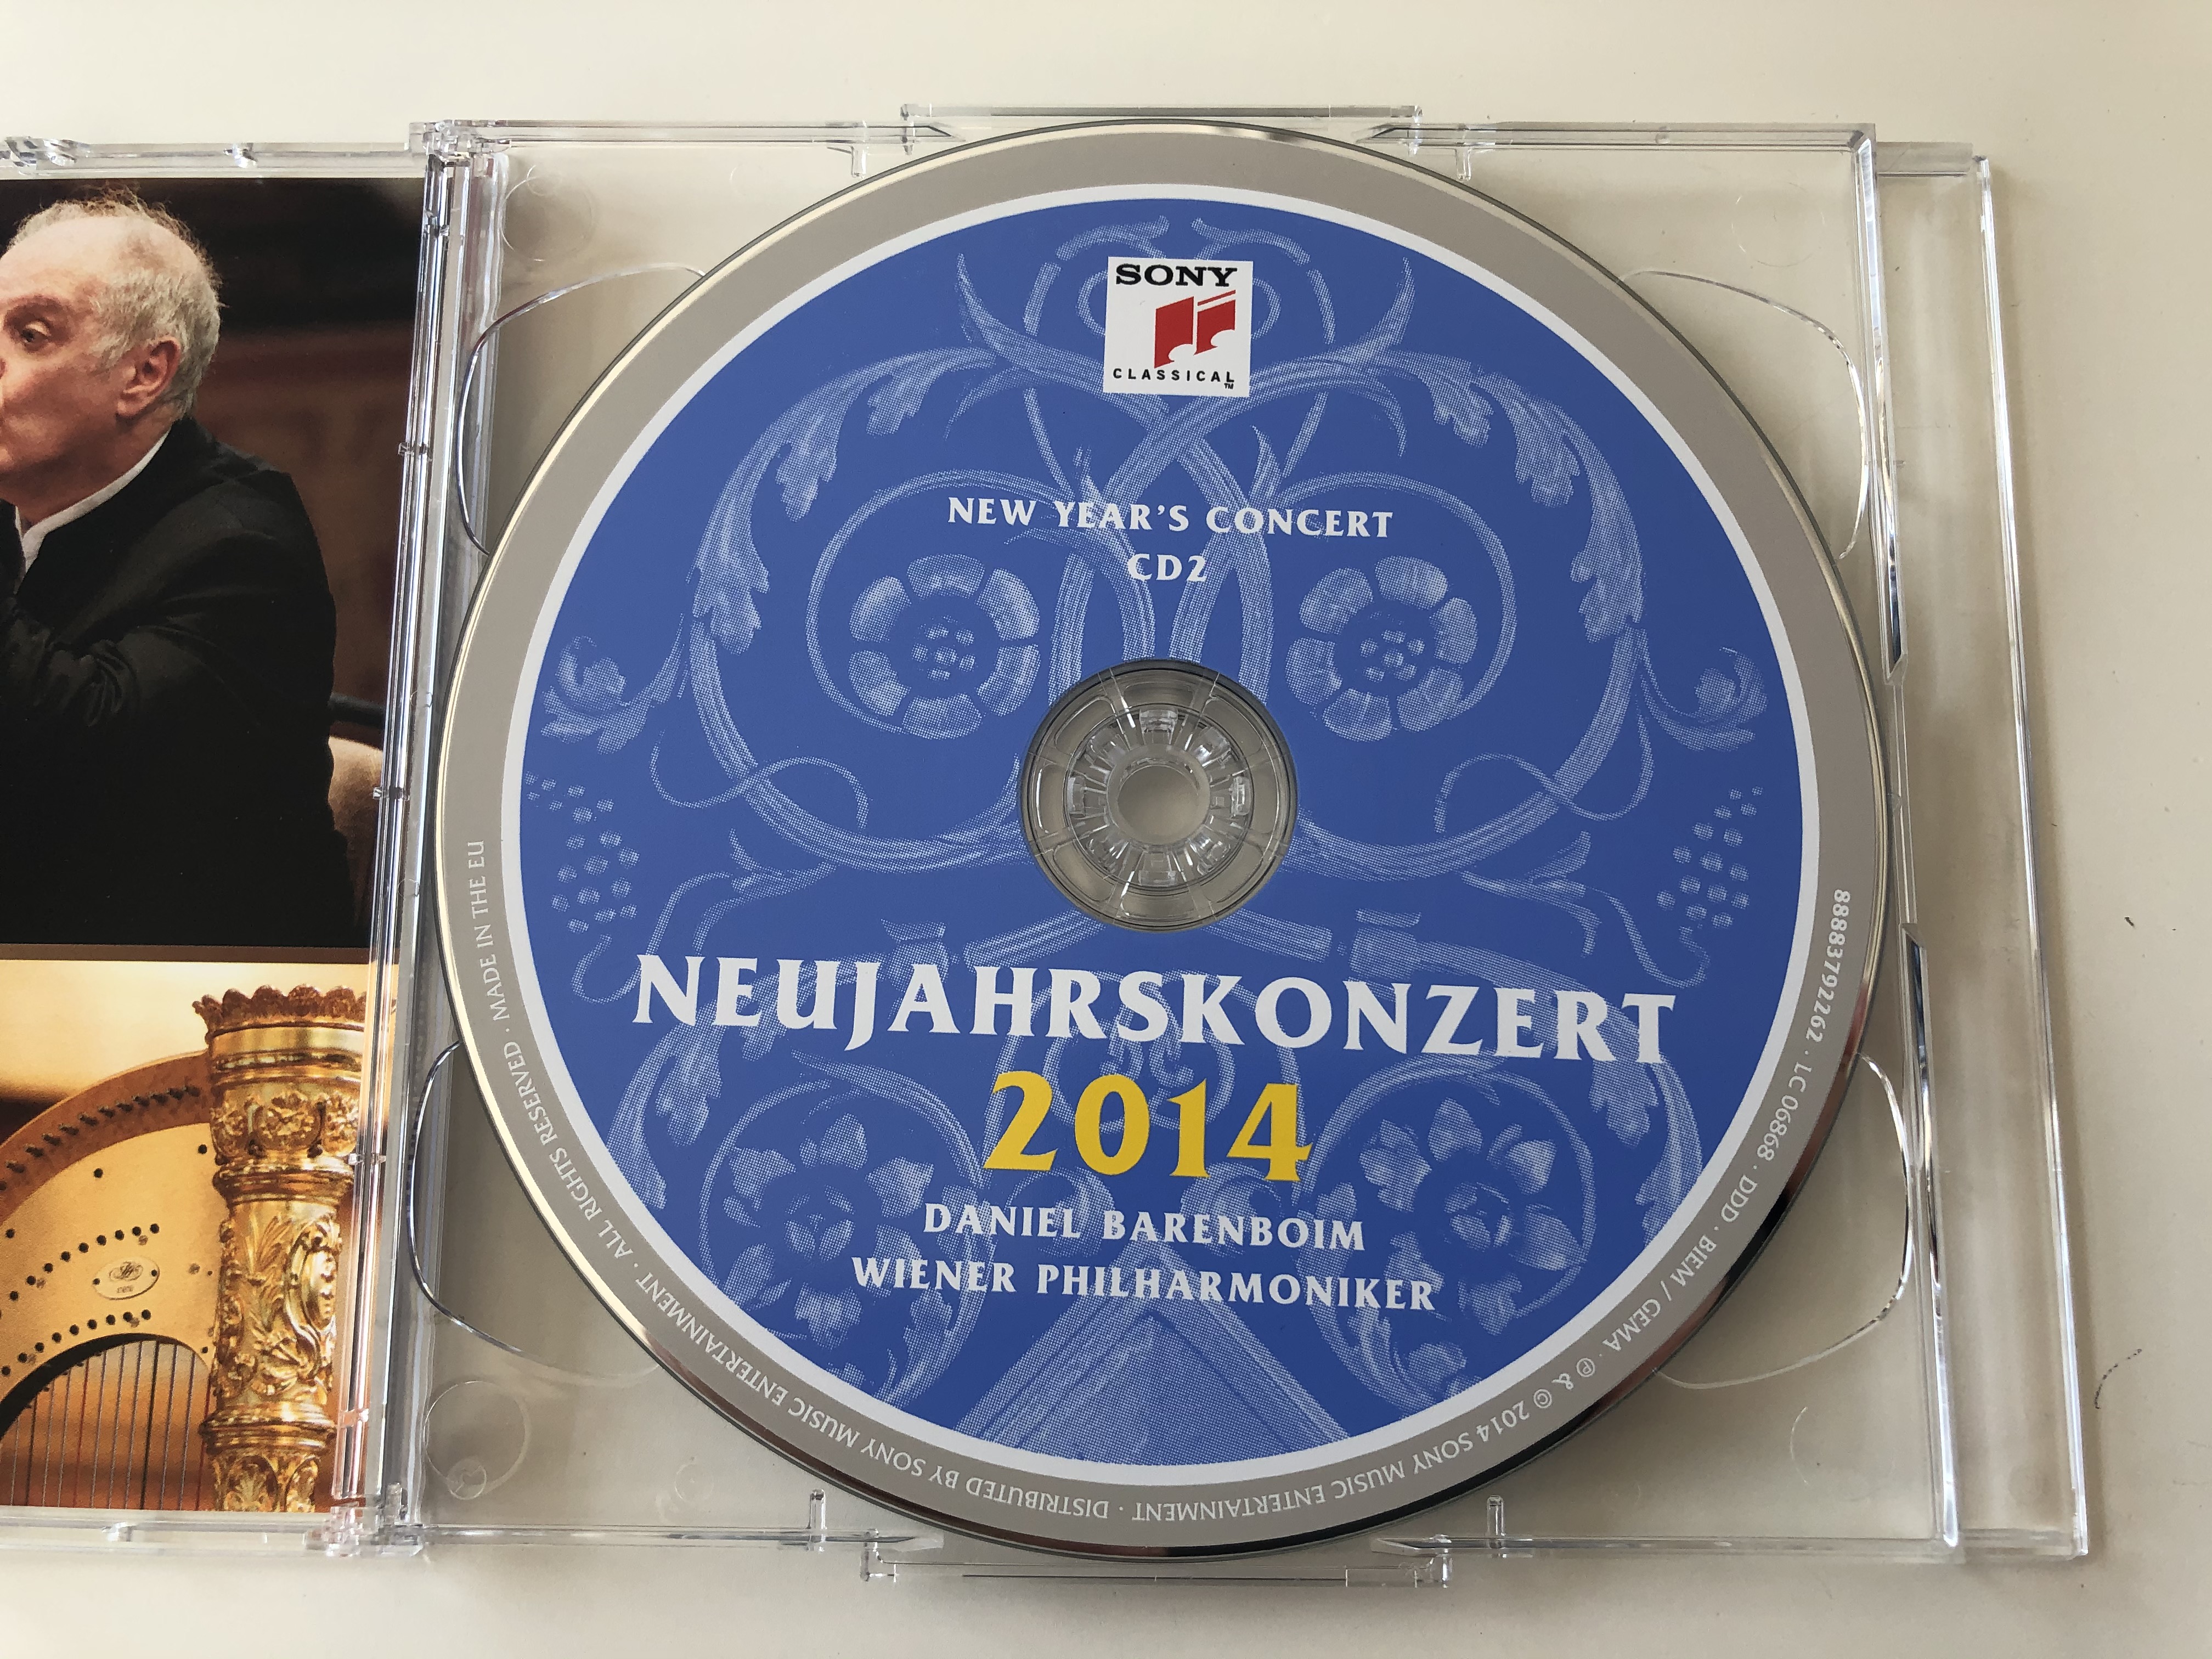 daniel-barenboim-wiener-philharmoniker-neujahrskonzert-new-year-s-concert-2014-sony-classical-2x-audio-cd-2014-88883792262-7-.jpg